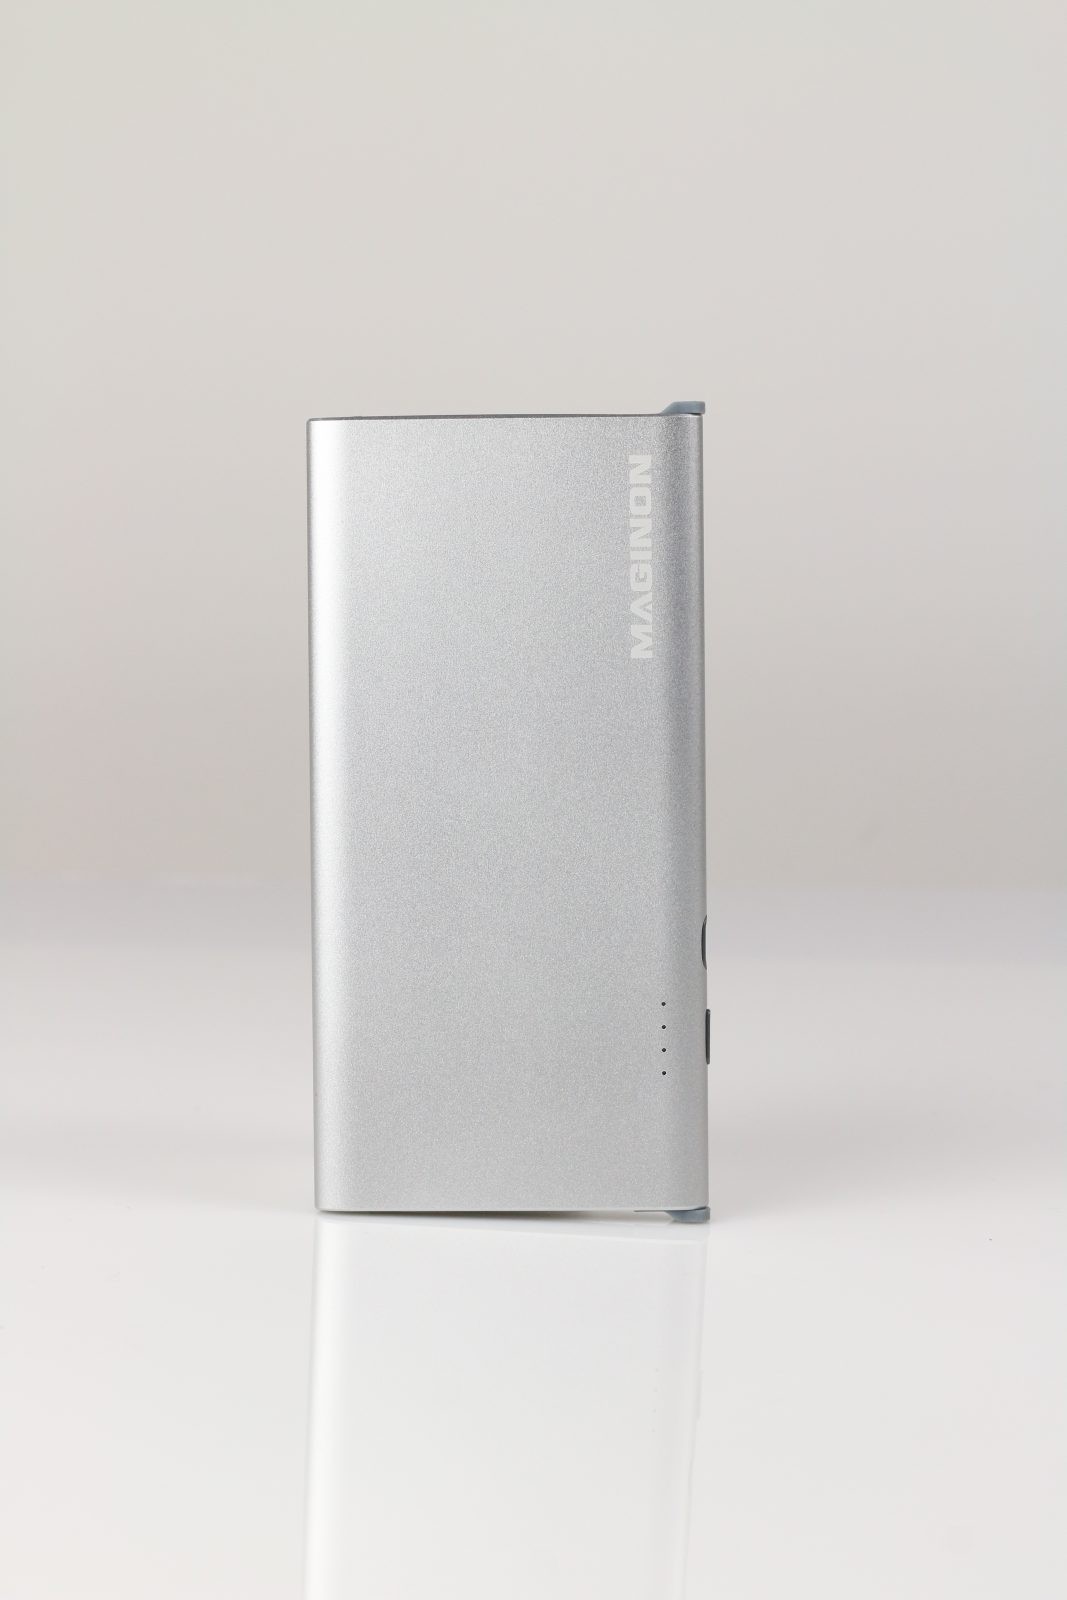 Powerbank aluminiowy z wbudowanym kablem lightning/micro USB srebrny